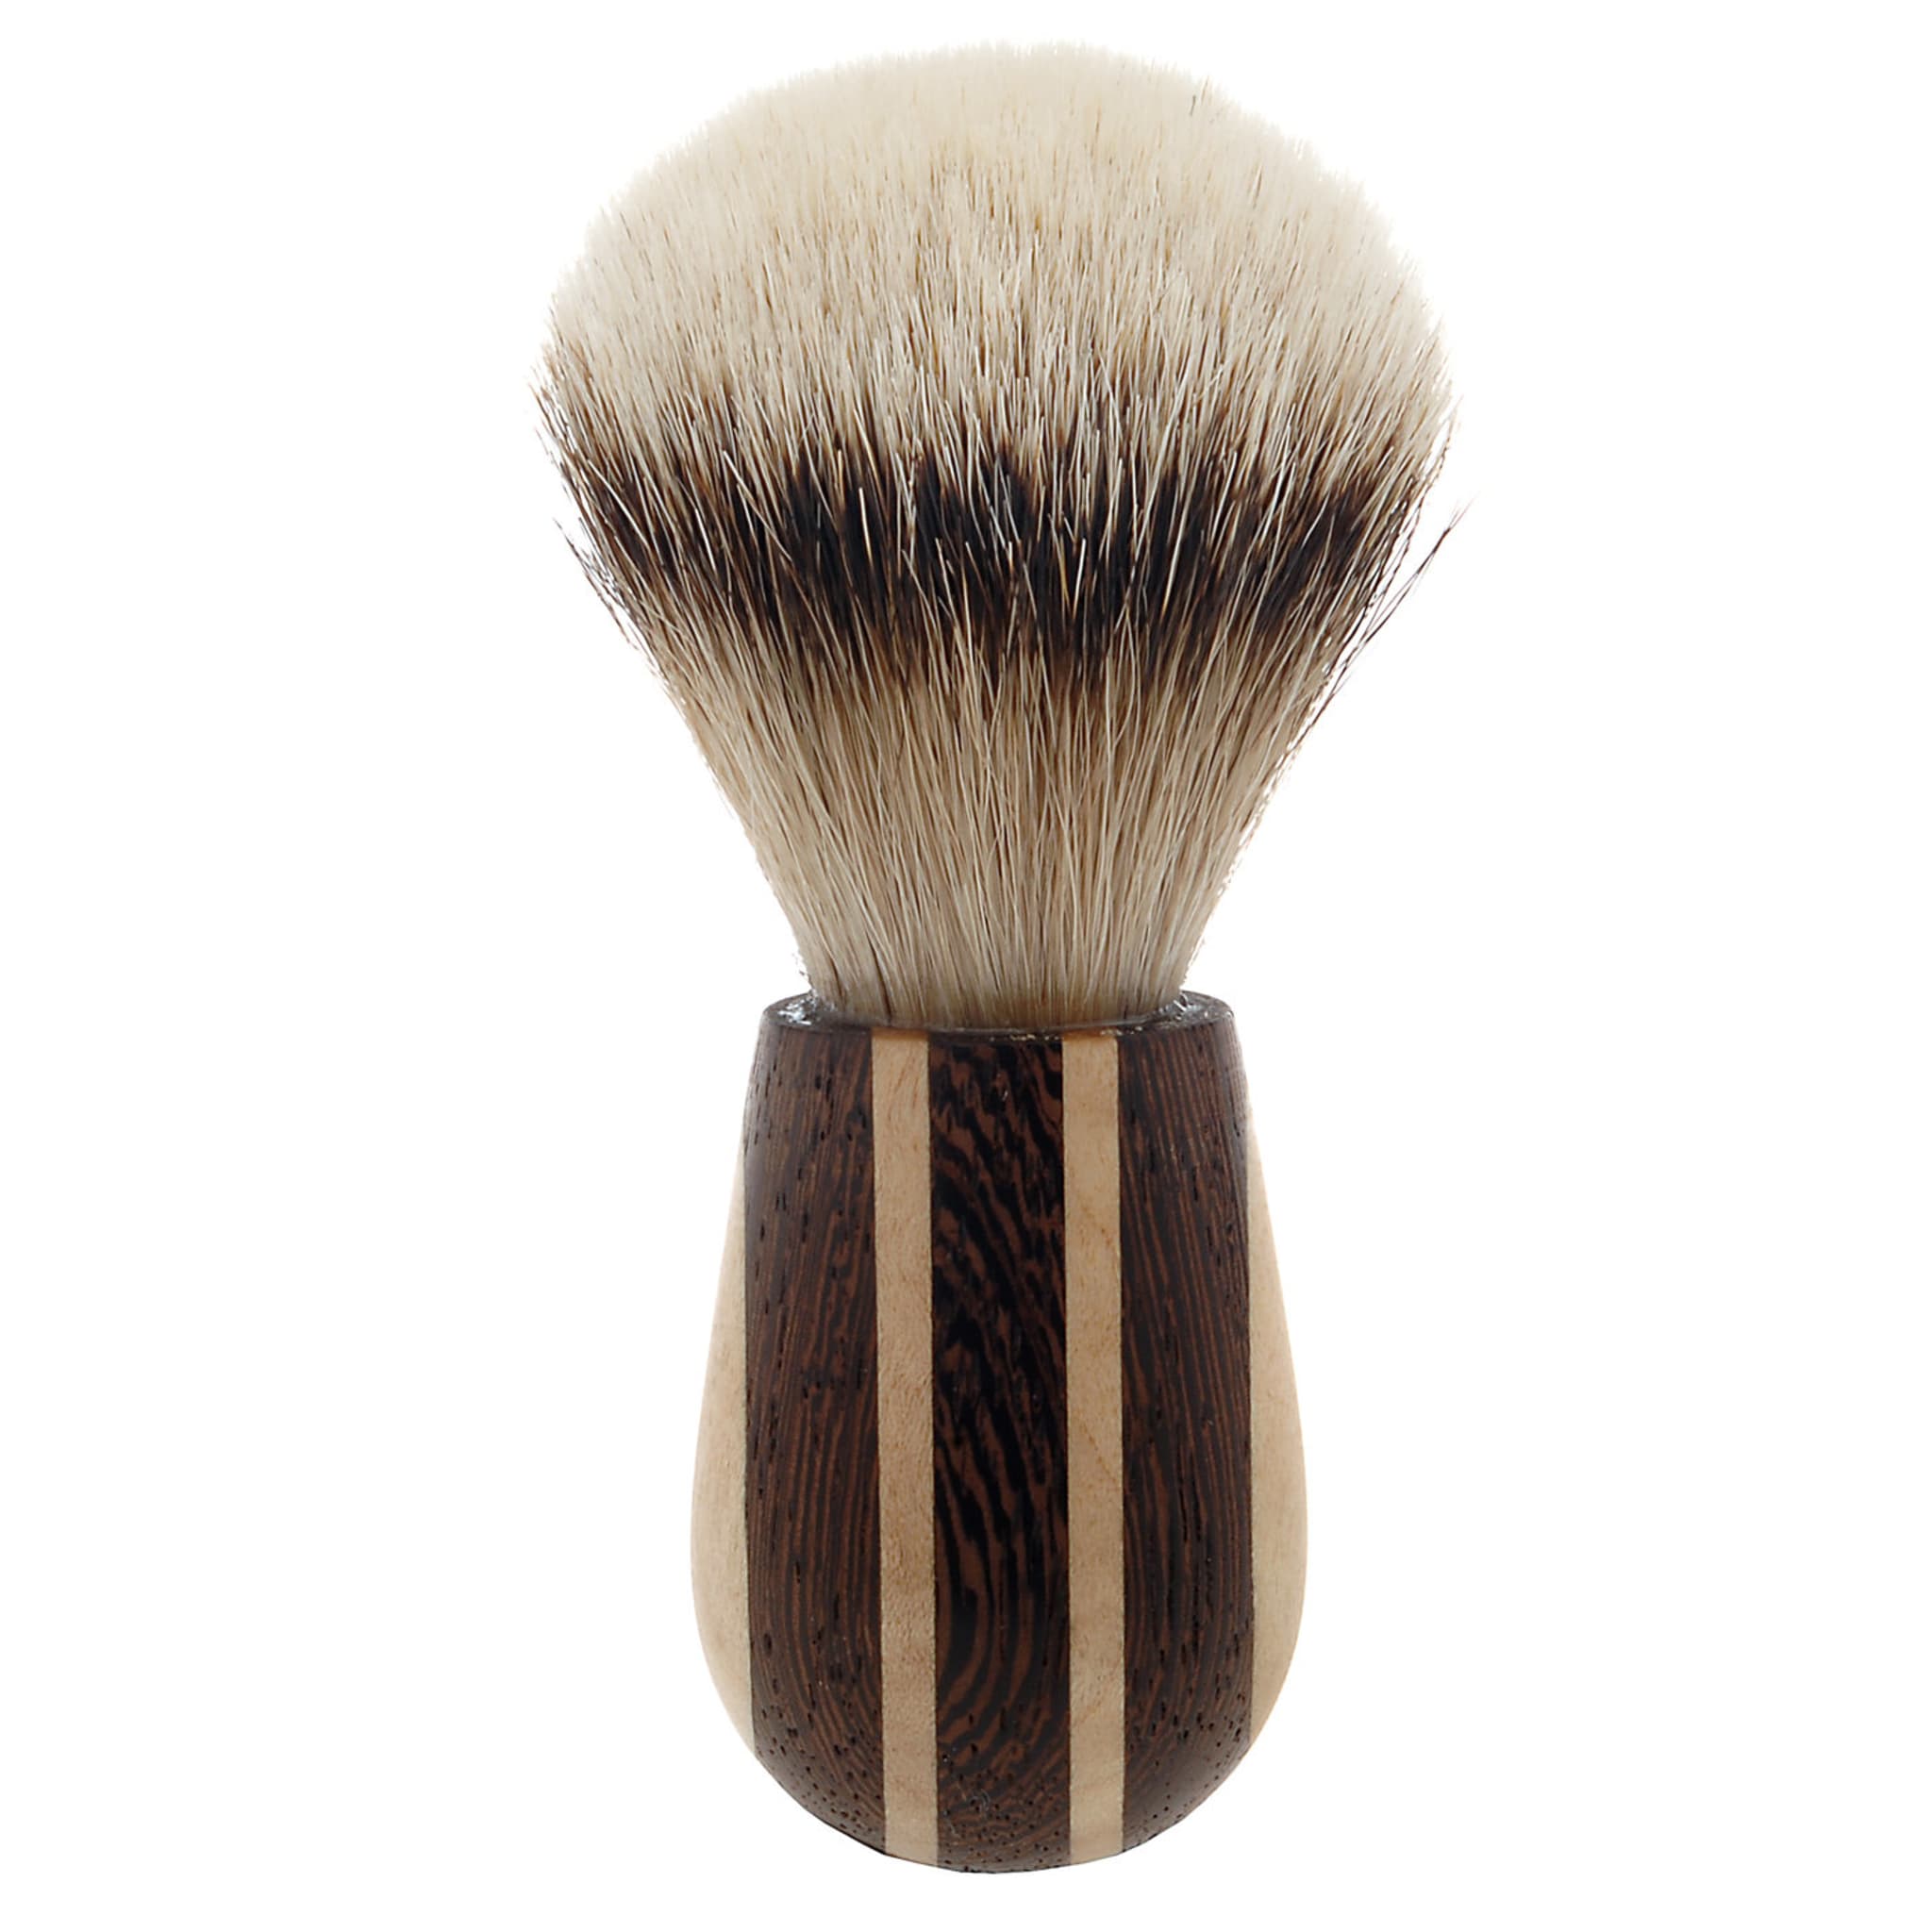 Shaving Brush in Wenge and Maple Wood - Alternative view 1